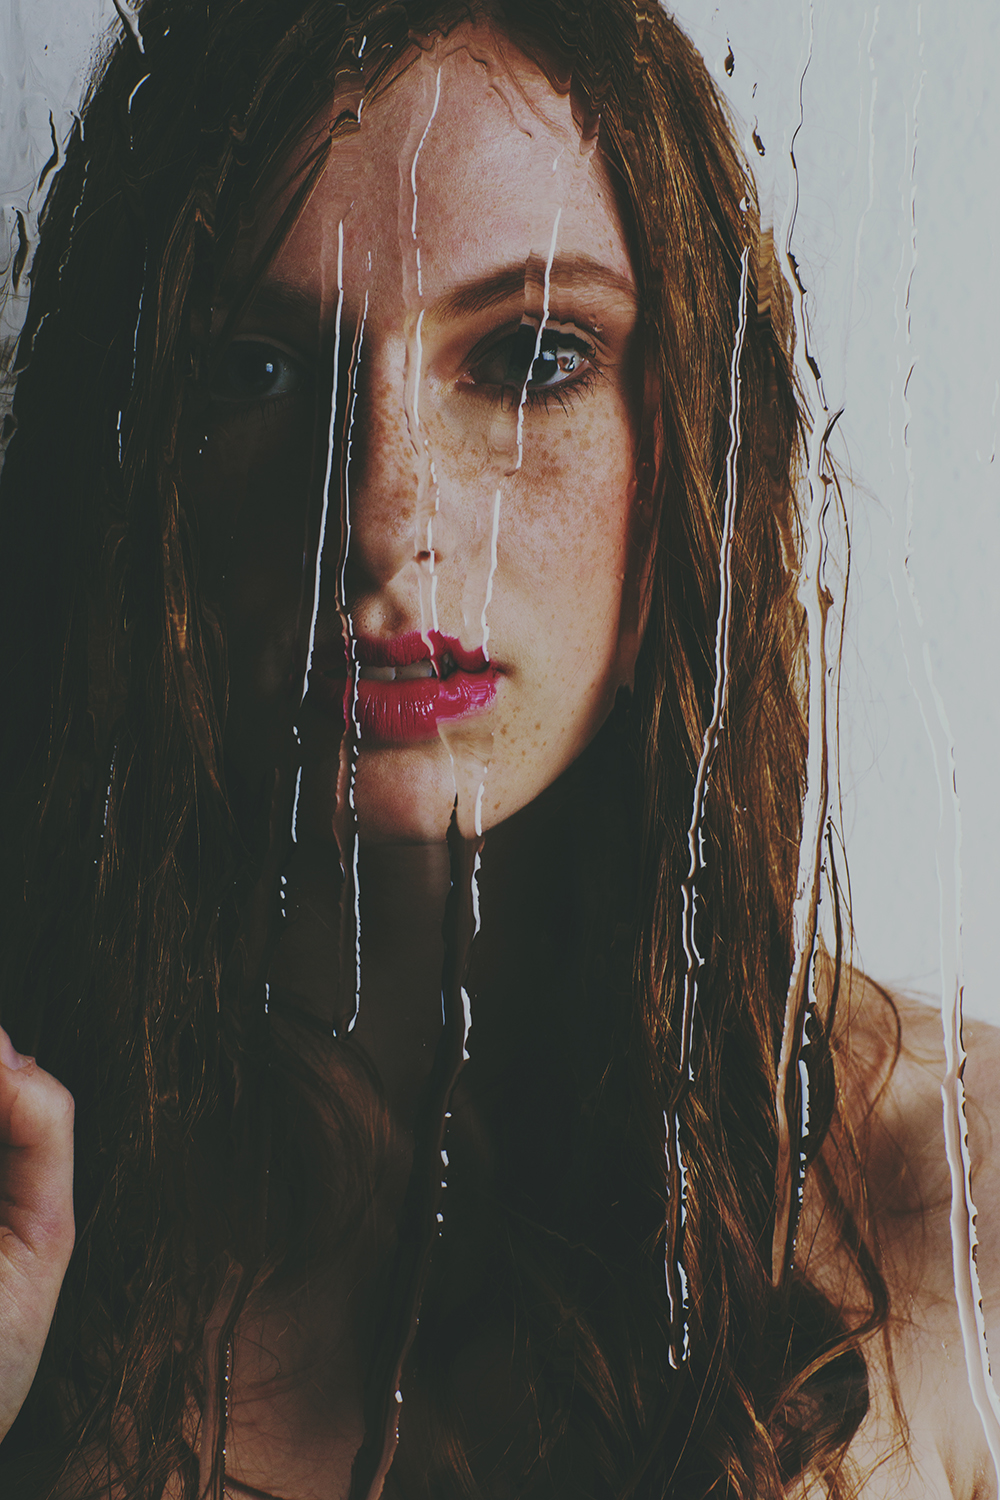 Nina S, Sarah Dirsch, together models, window, rain, water, drops, portrait